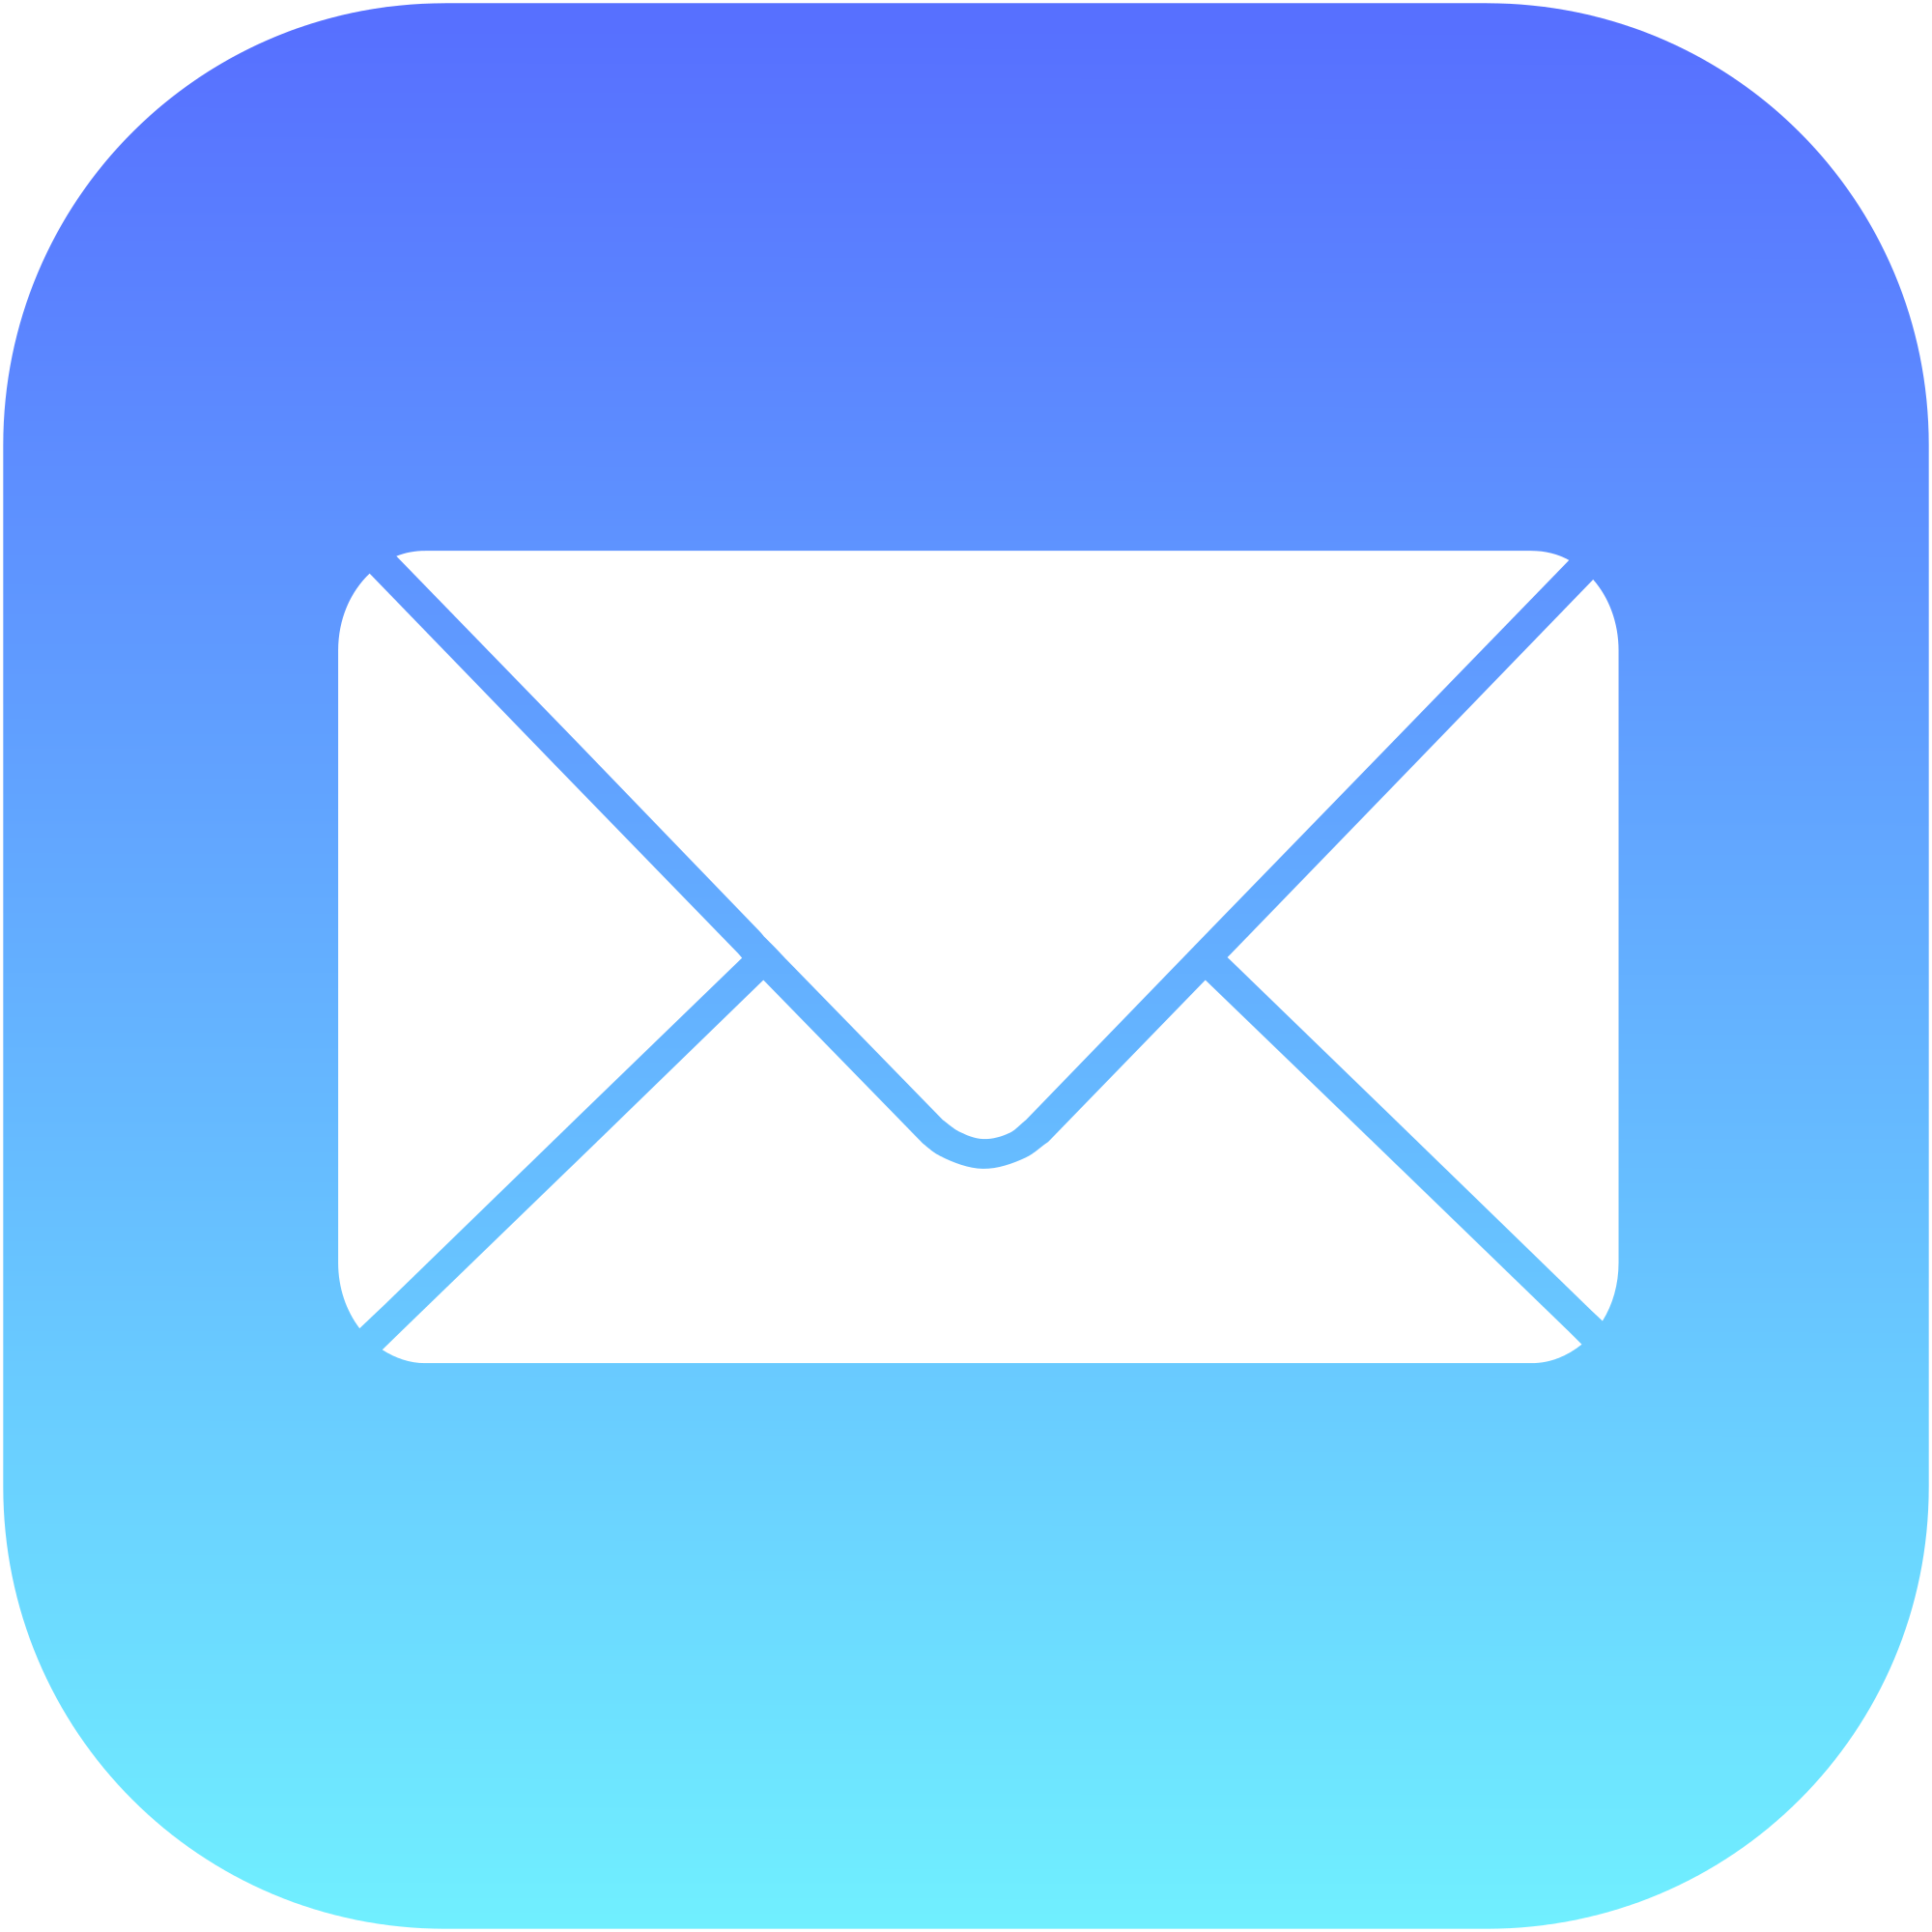 Message grant. Иконка почта. Значок e-mail. Векторный значок почты. Значок почты IOS.